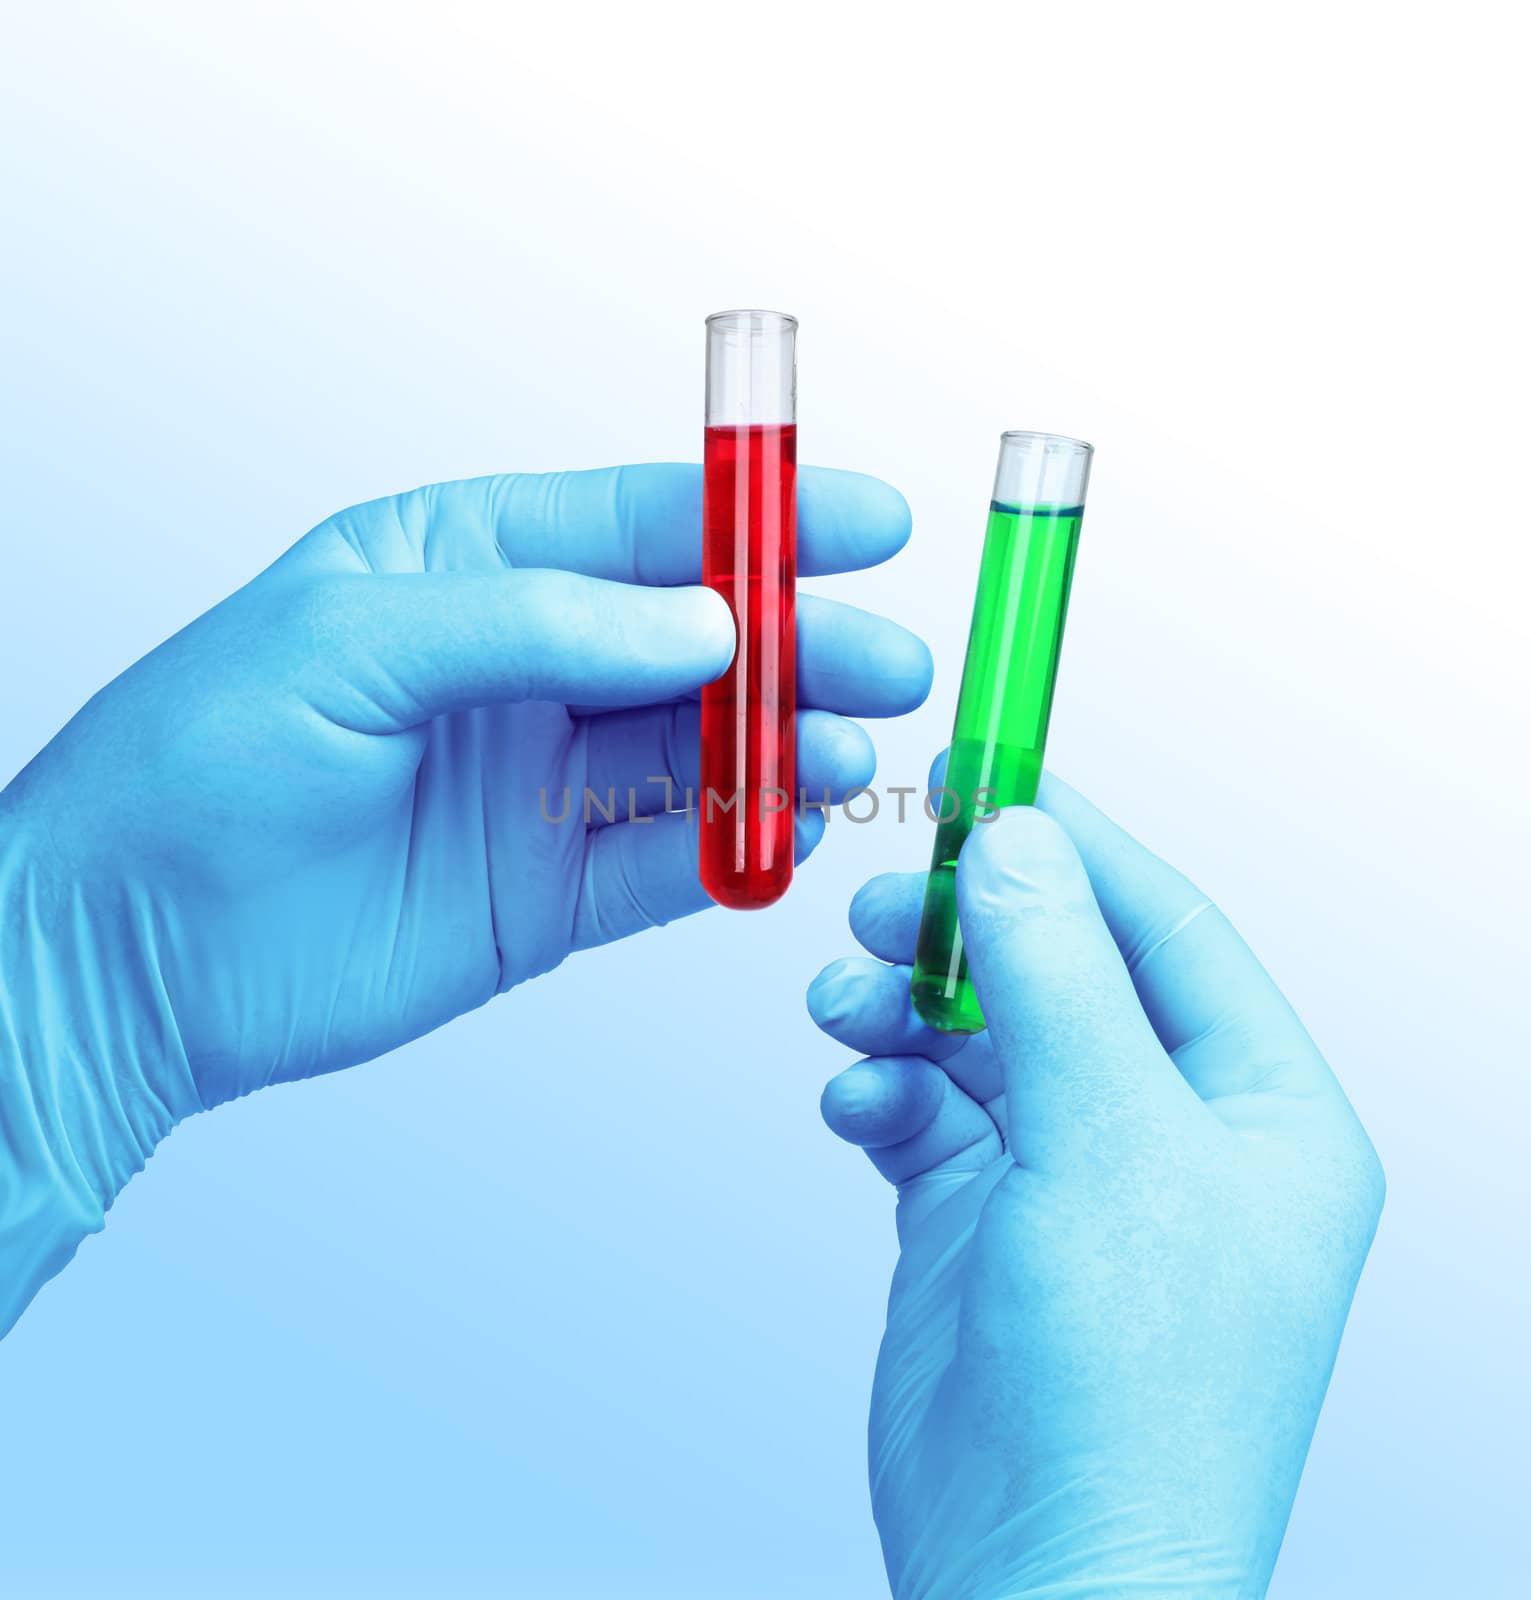 Chemist hands in proctective gloves holding sample liquids in test tubes